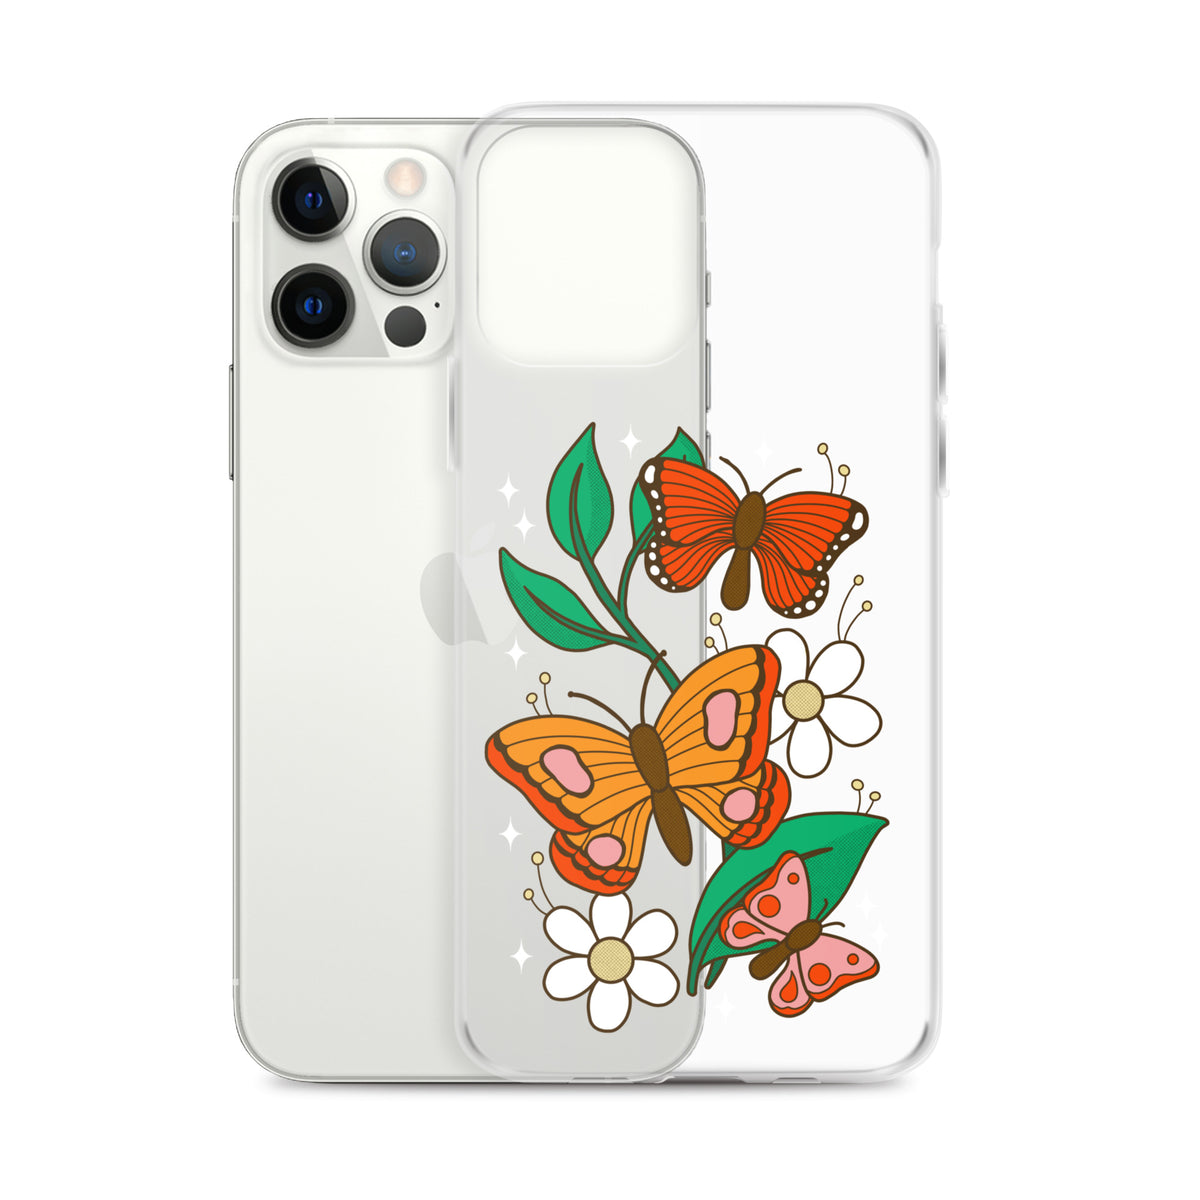 Retro Butterflies iPhone Case